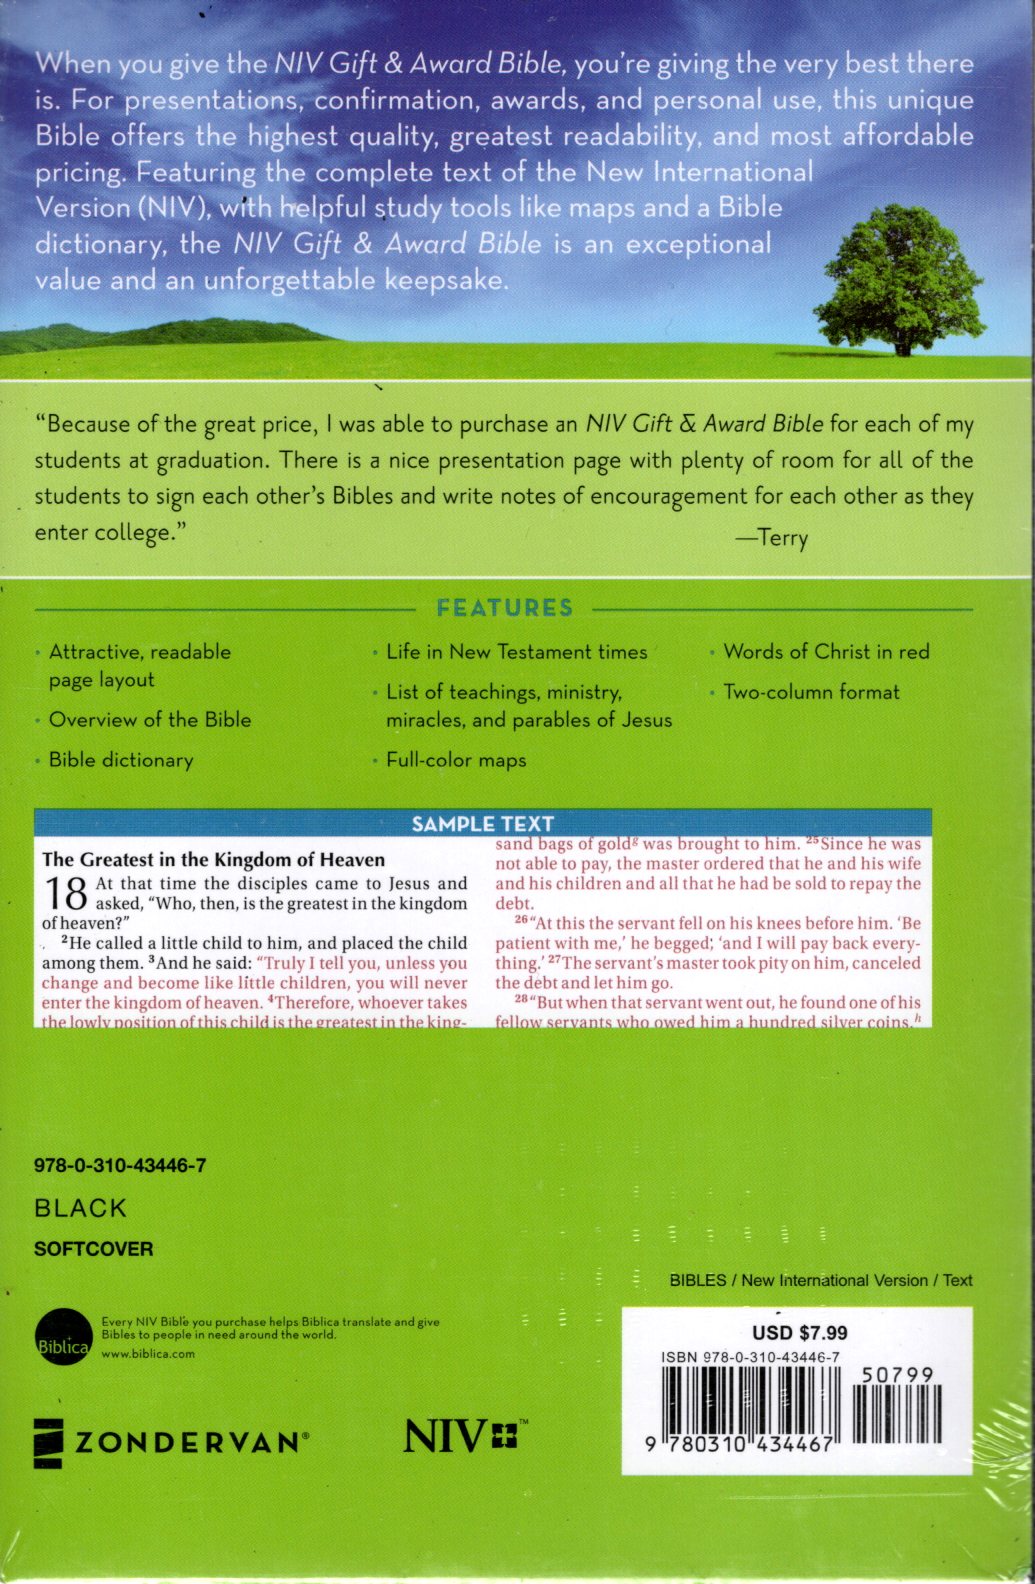 Zondervan NIV® Gift & Award Bible - Softcover (Black)